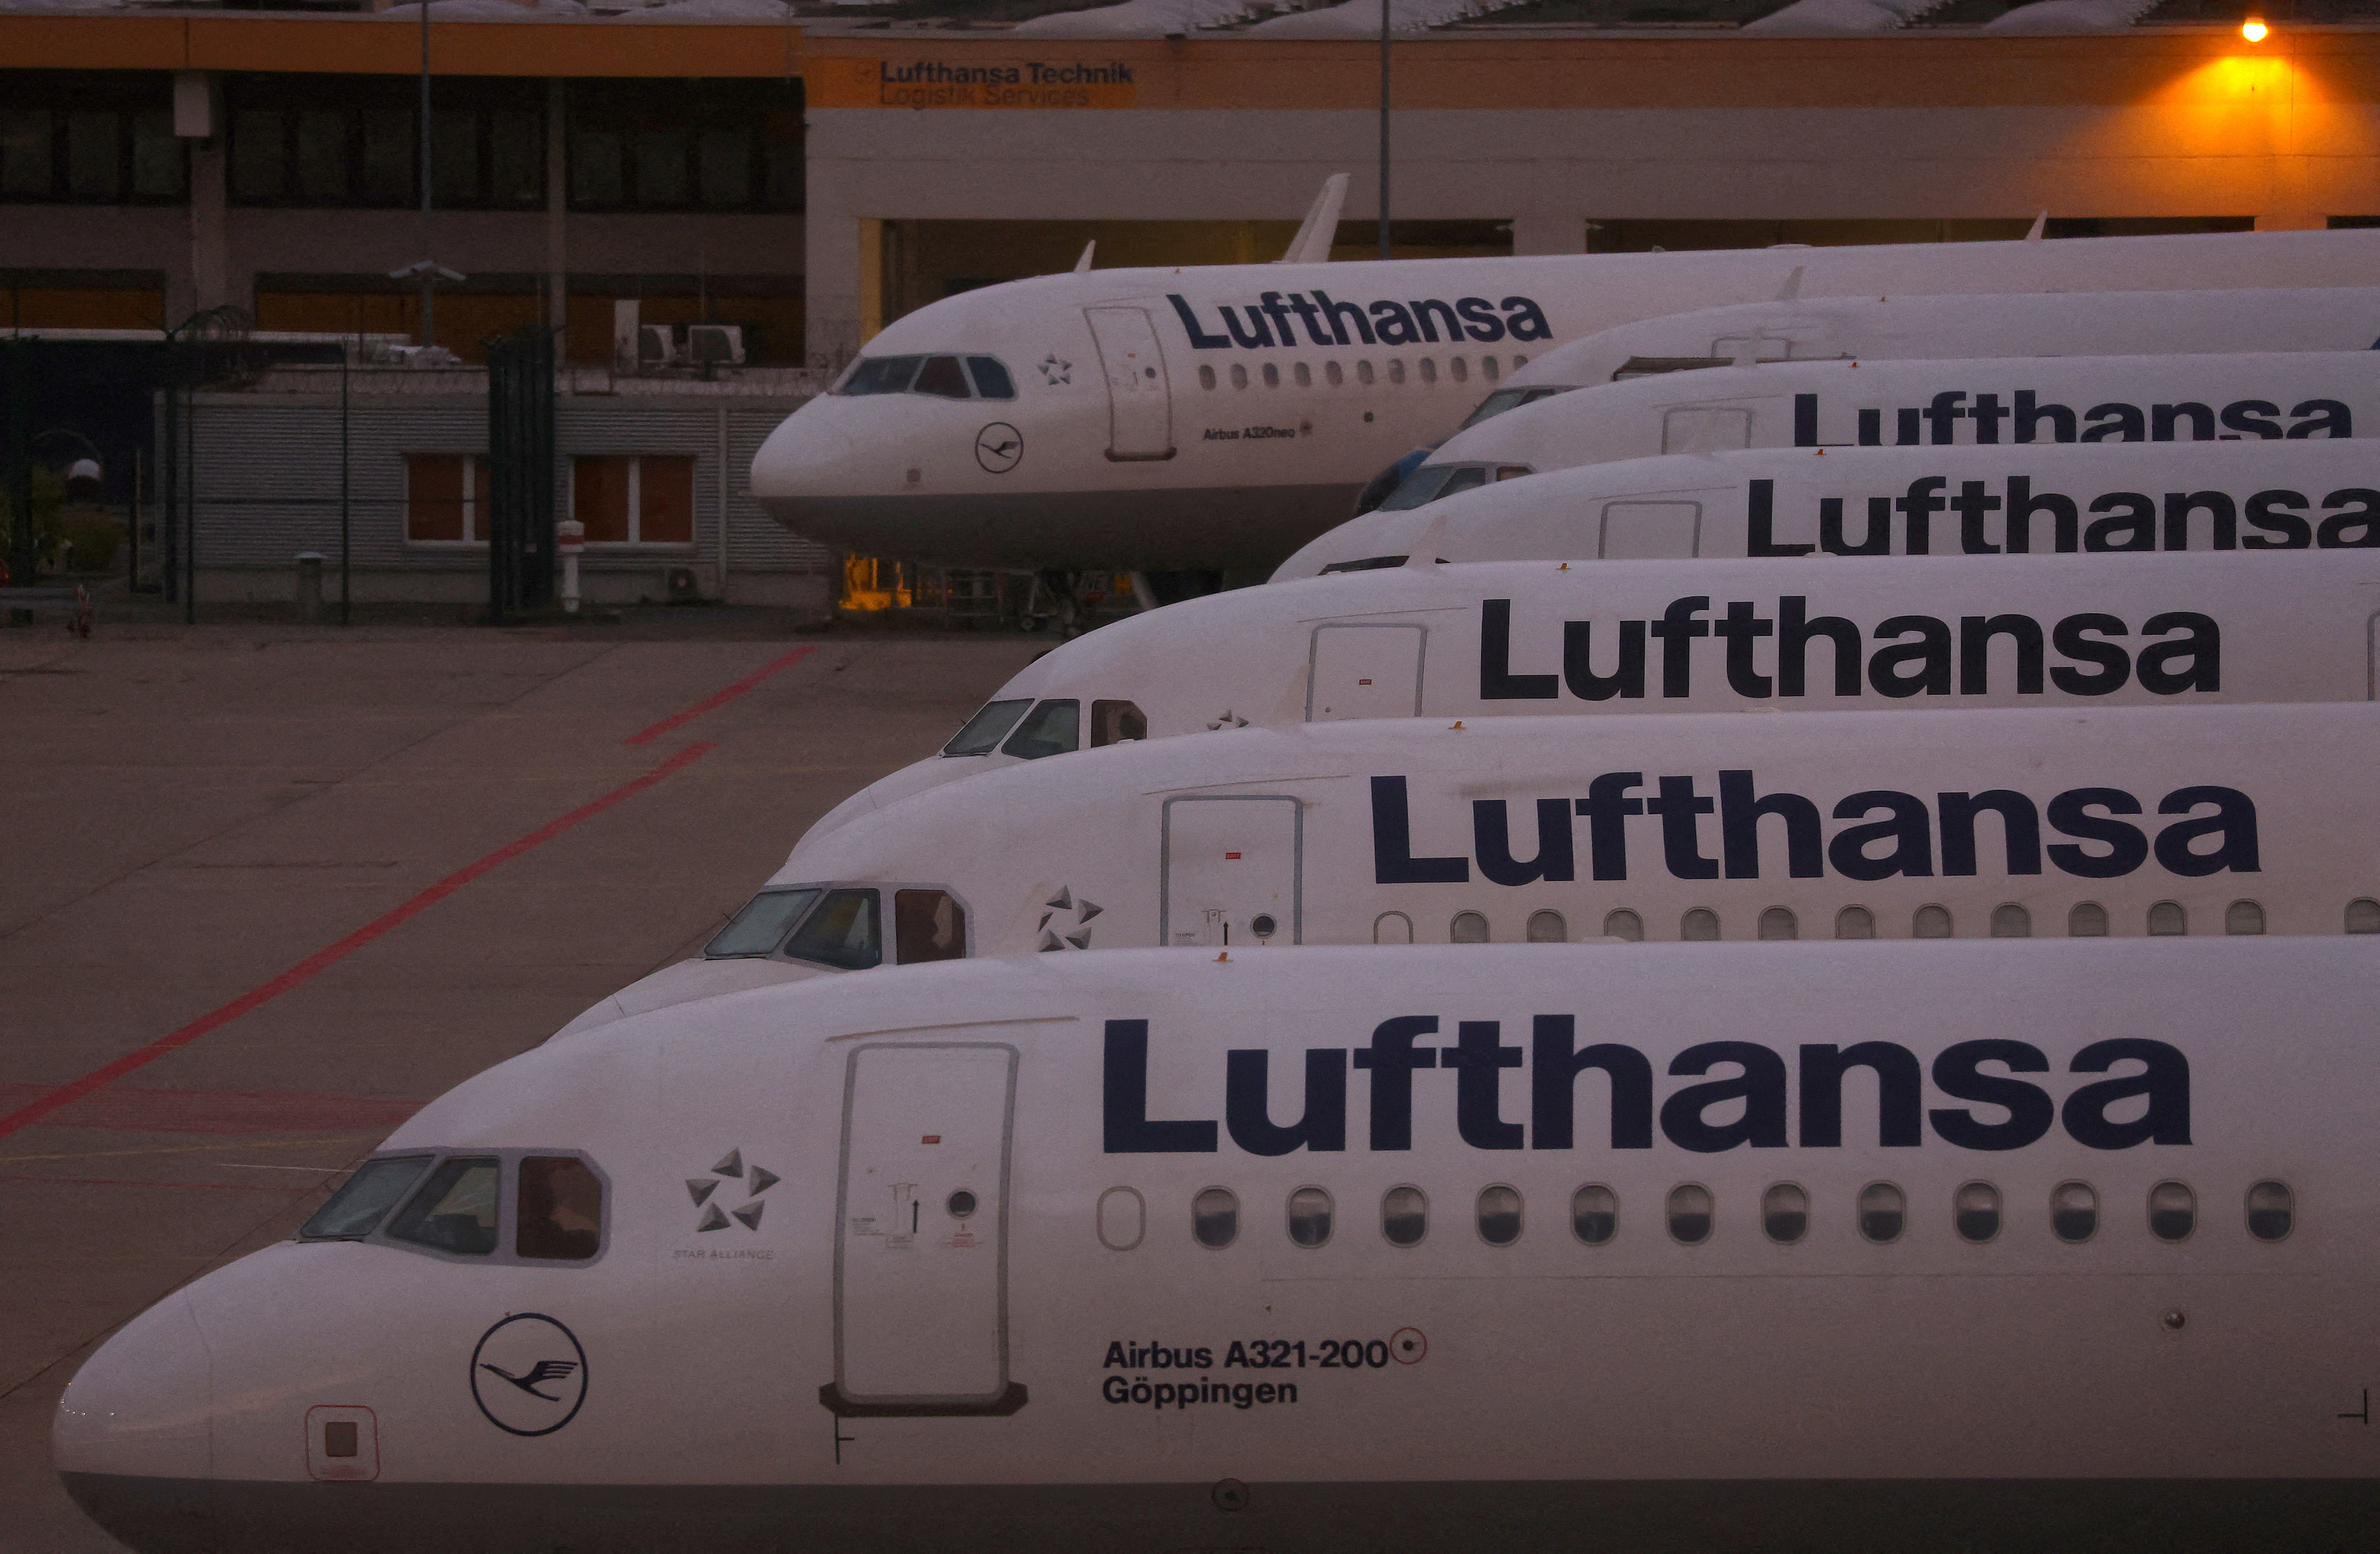 Lufthansa planes at Frankfurt airport